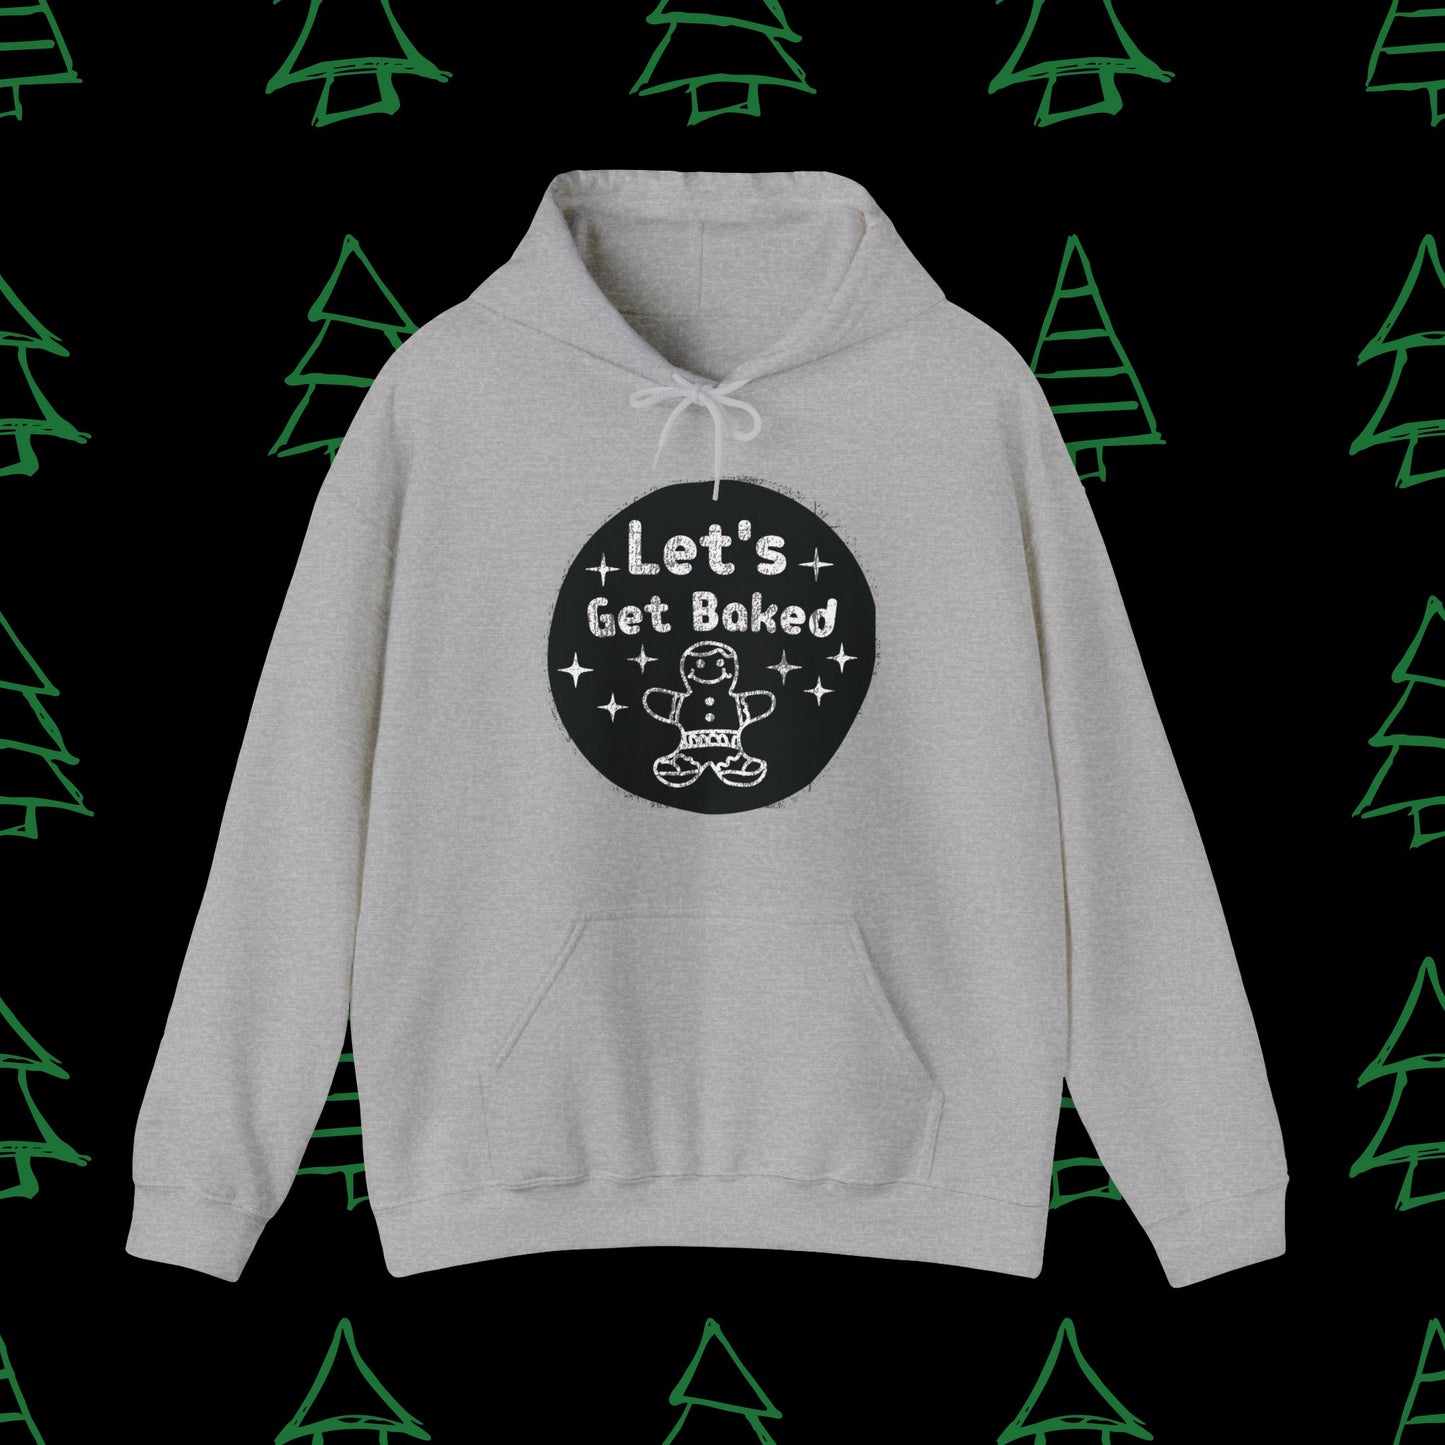 Christmas Hoodie - Let's Get Baked - Mens Christmas Shirts - Adult Christmas Hooded Sweatshirt Hooded Sweatshirt Graphic Avenue Sport Grey Adult Small 